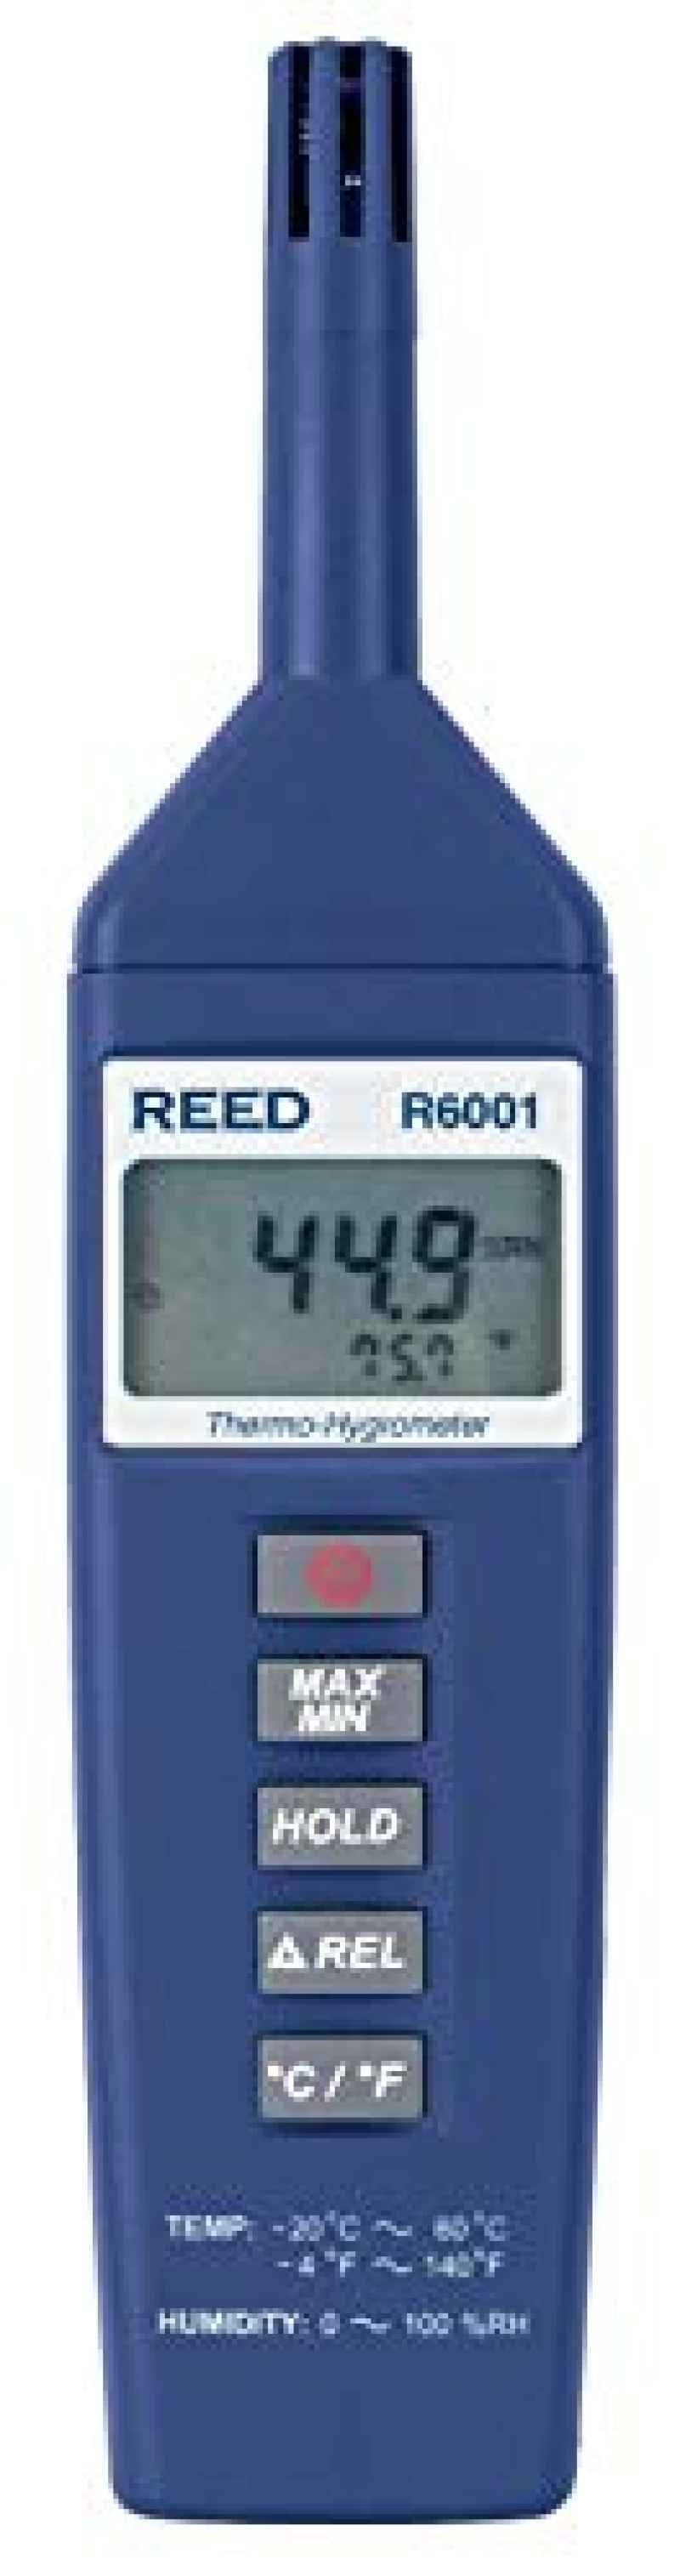 Promo REED Instruments R6001 Thermo-Hygrometer Diskon 10% di Seller Wazava  South Korea Blibli